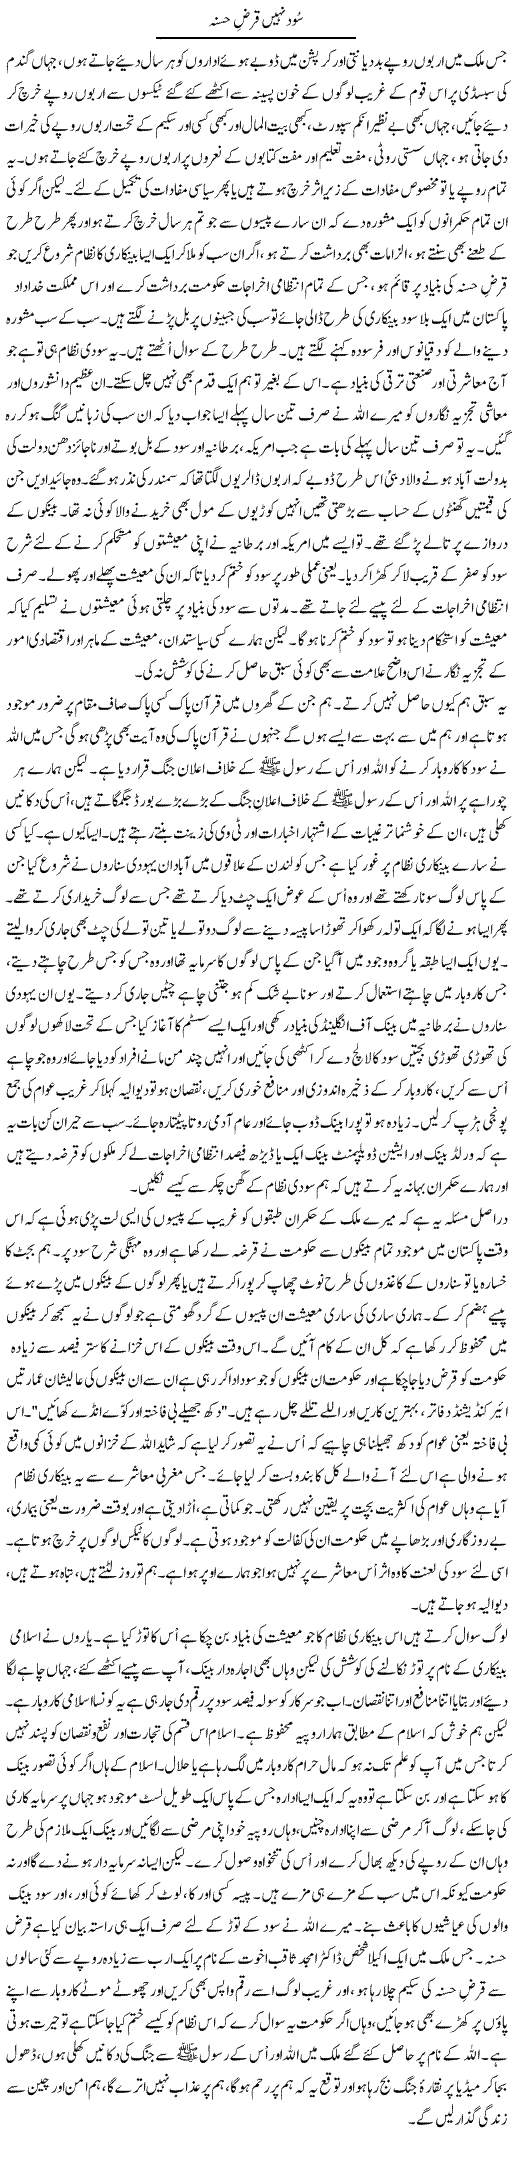 Interest and Islam Express Column Orya Maqbool 25 June 2011